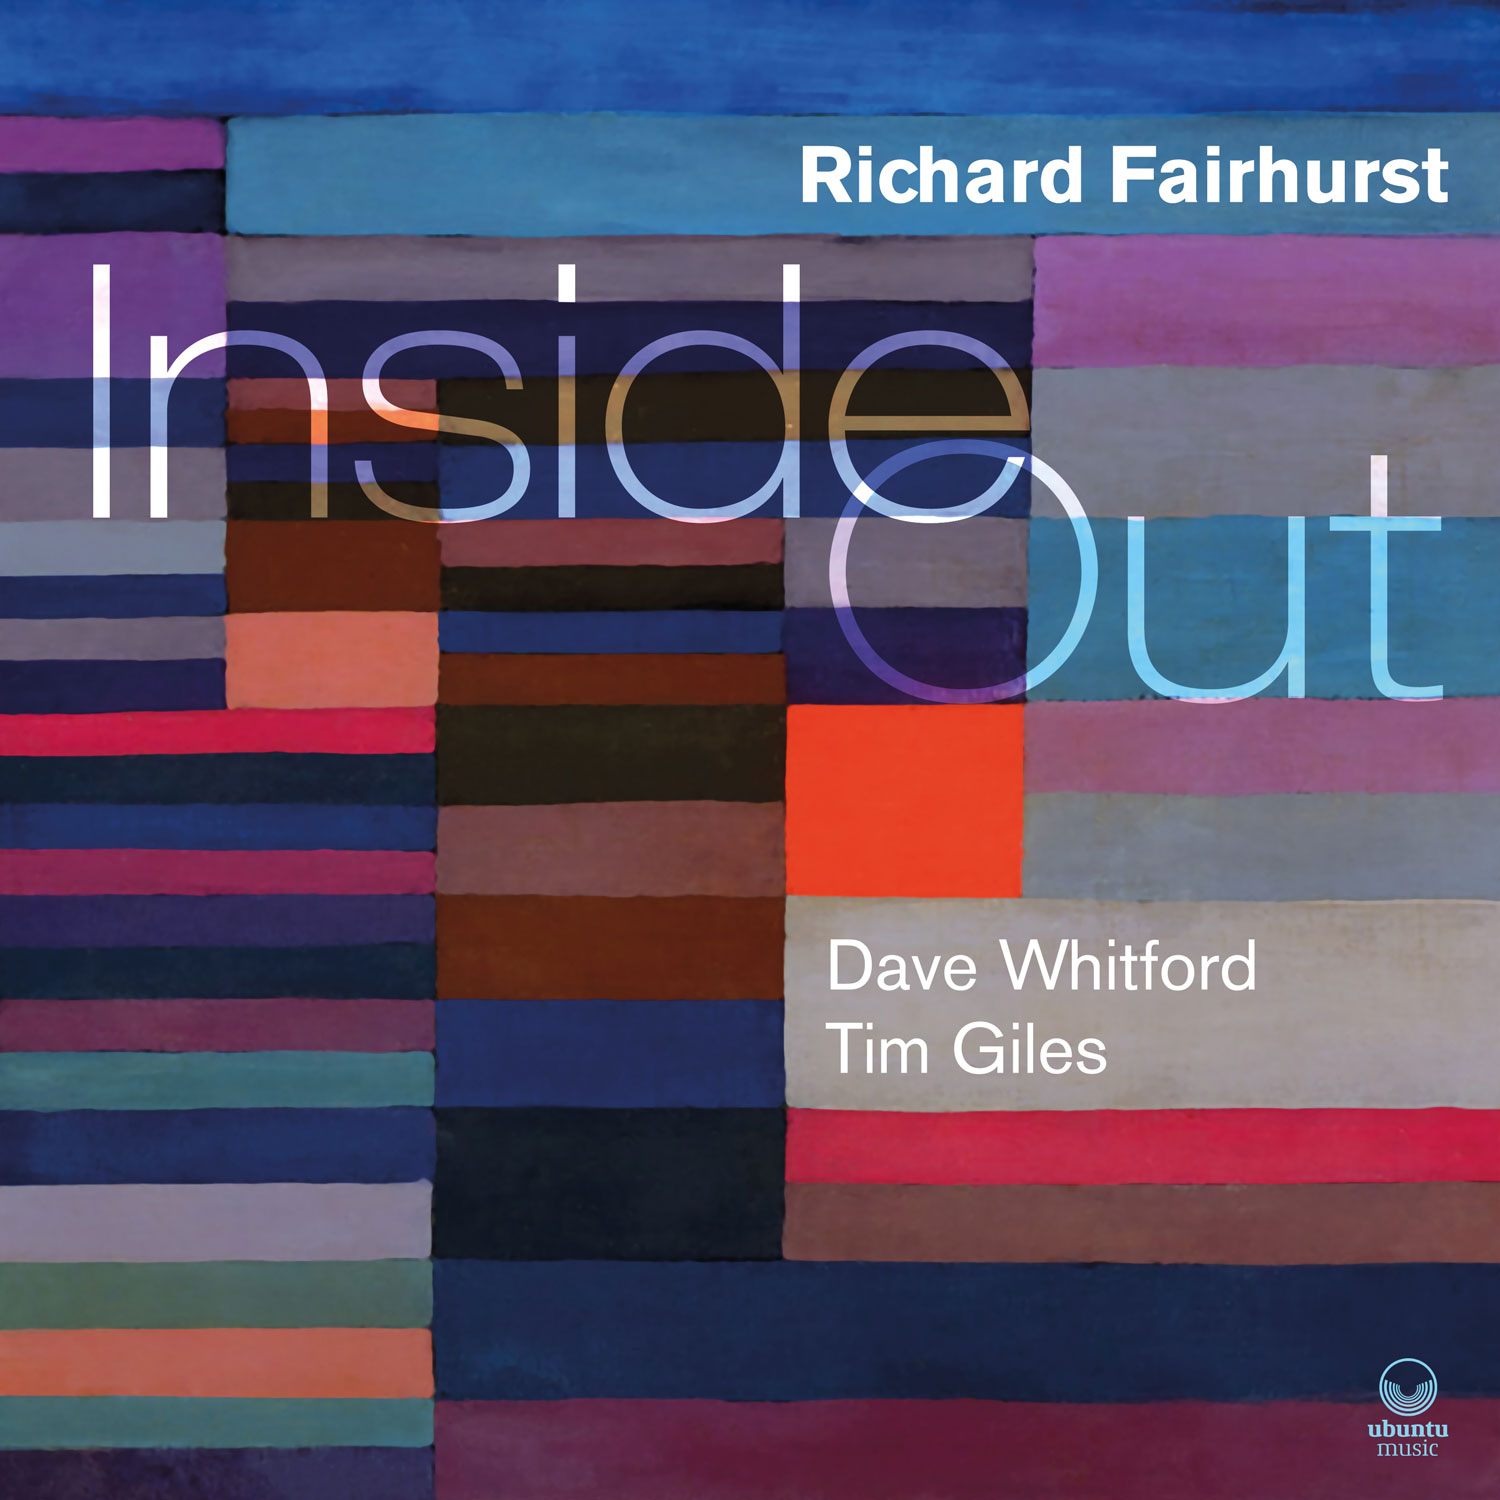 Review of Richard Fairhurst: Inside Out